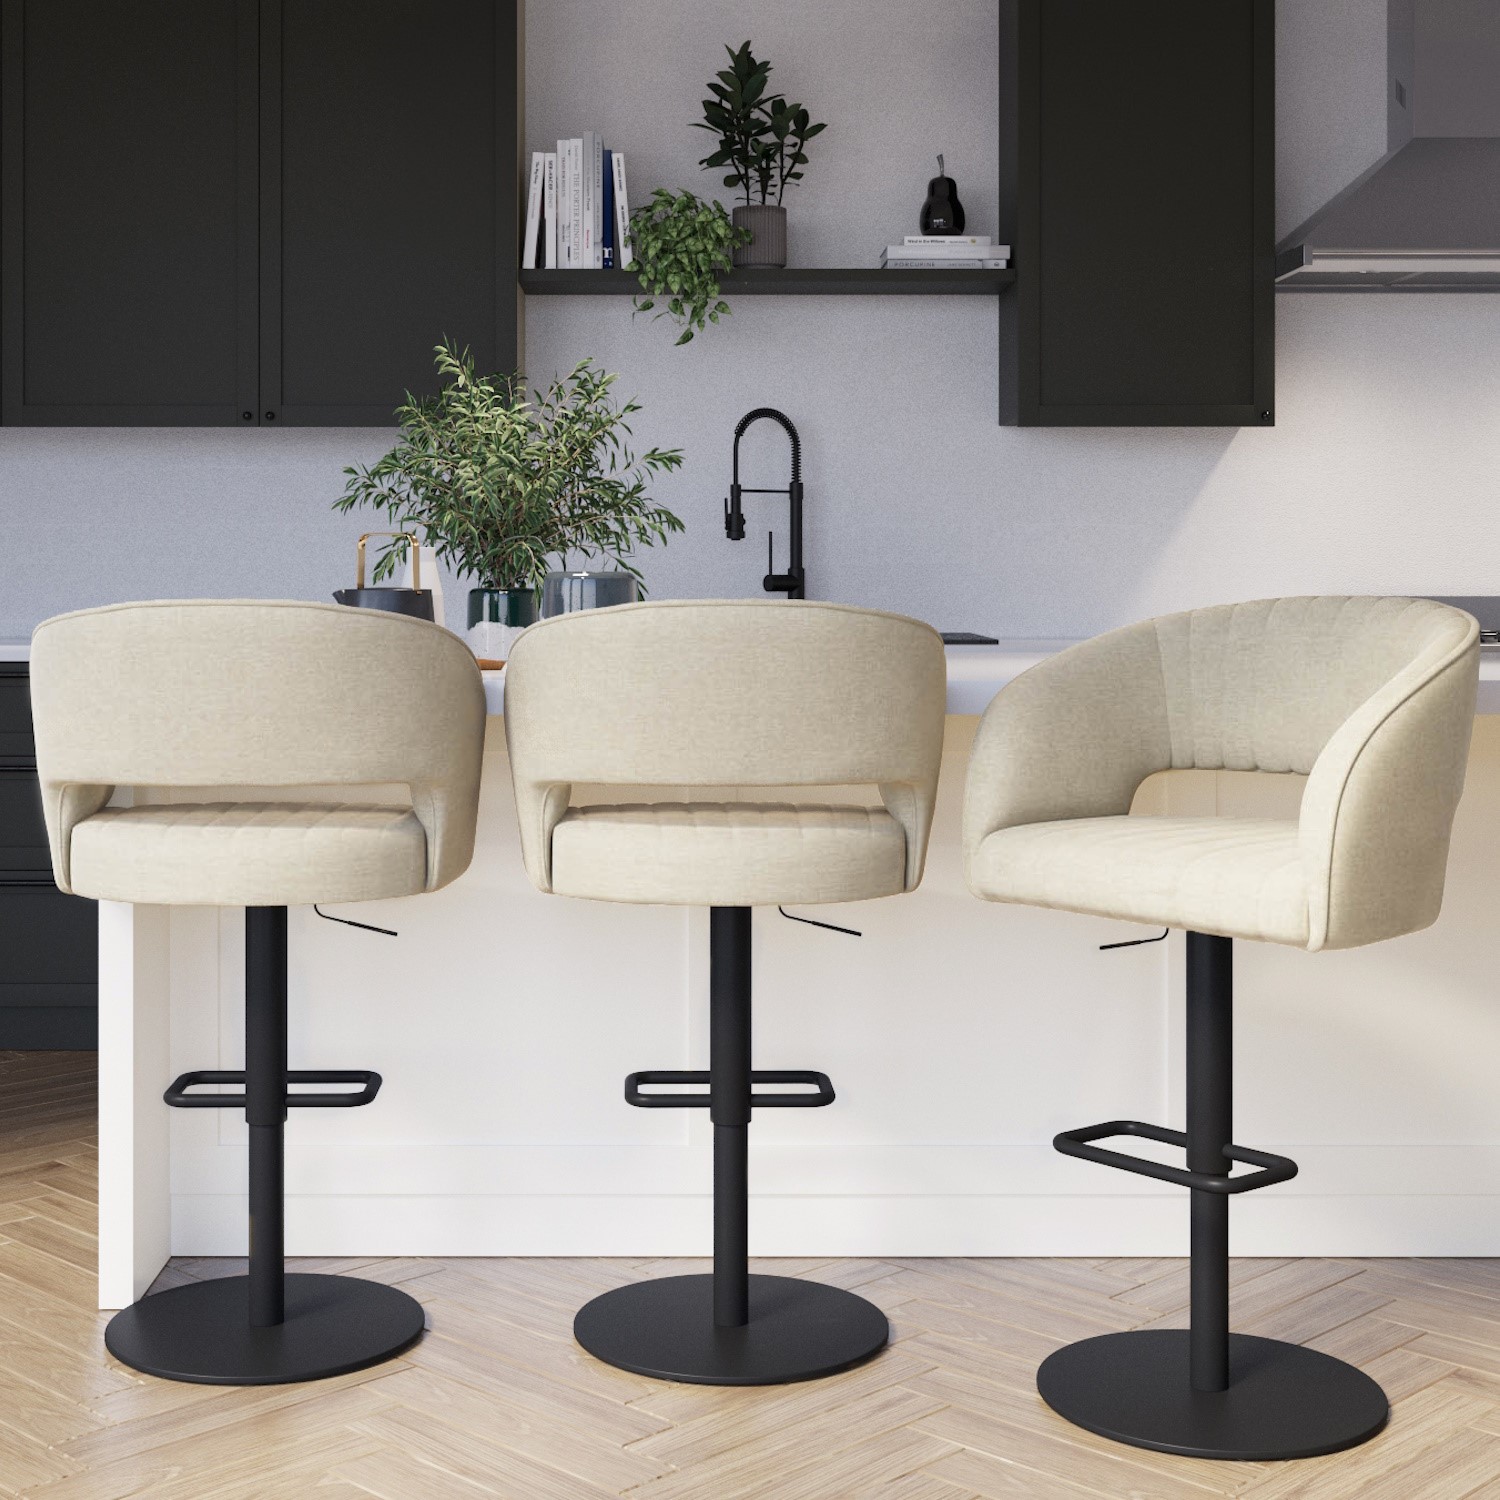 Photo of Set of 3 curved beige fabric adjustable swivel bar stool with black base - runa